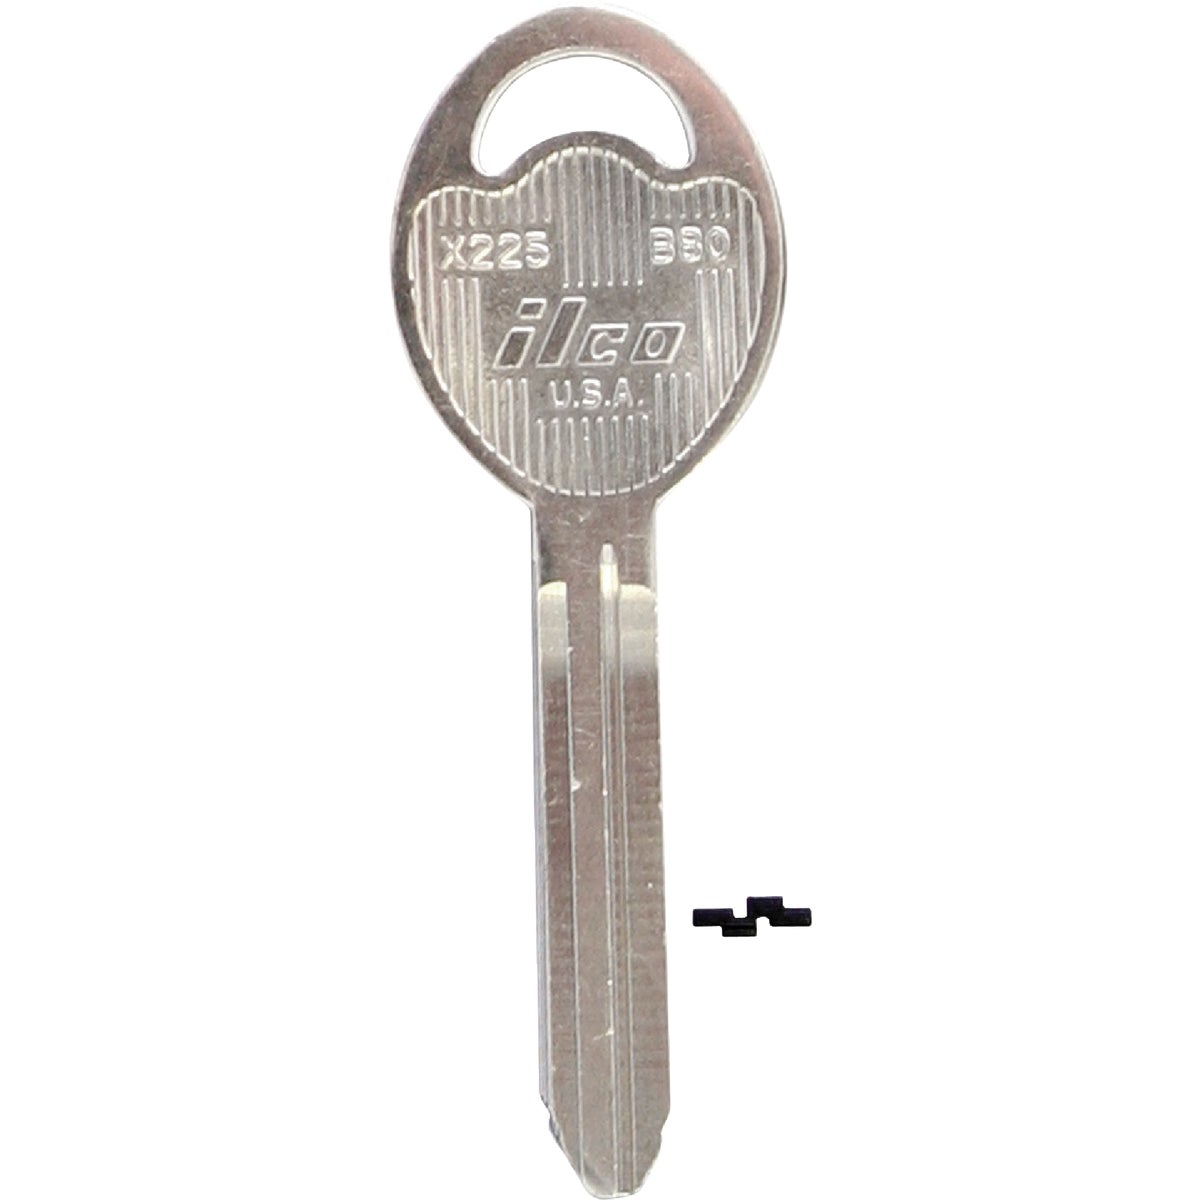 ILCO GM Nickel Plated Automotive Key, B80 / X225 (10-Pack)